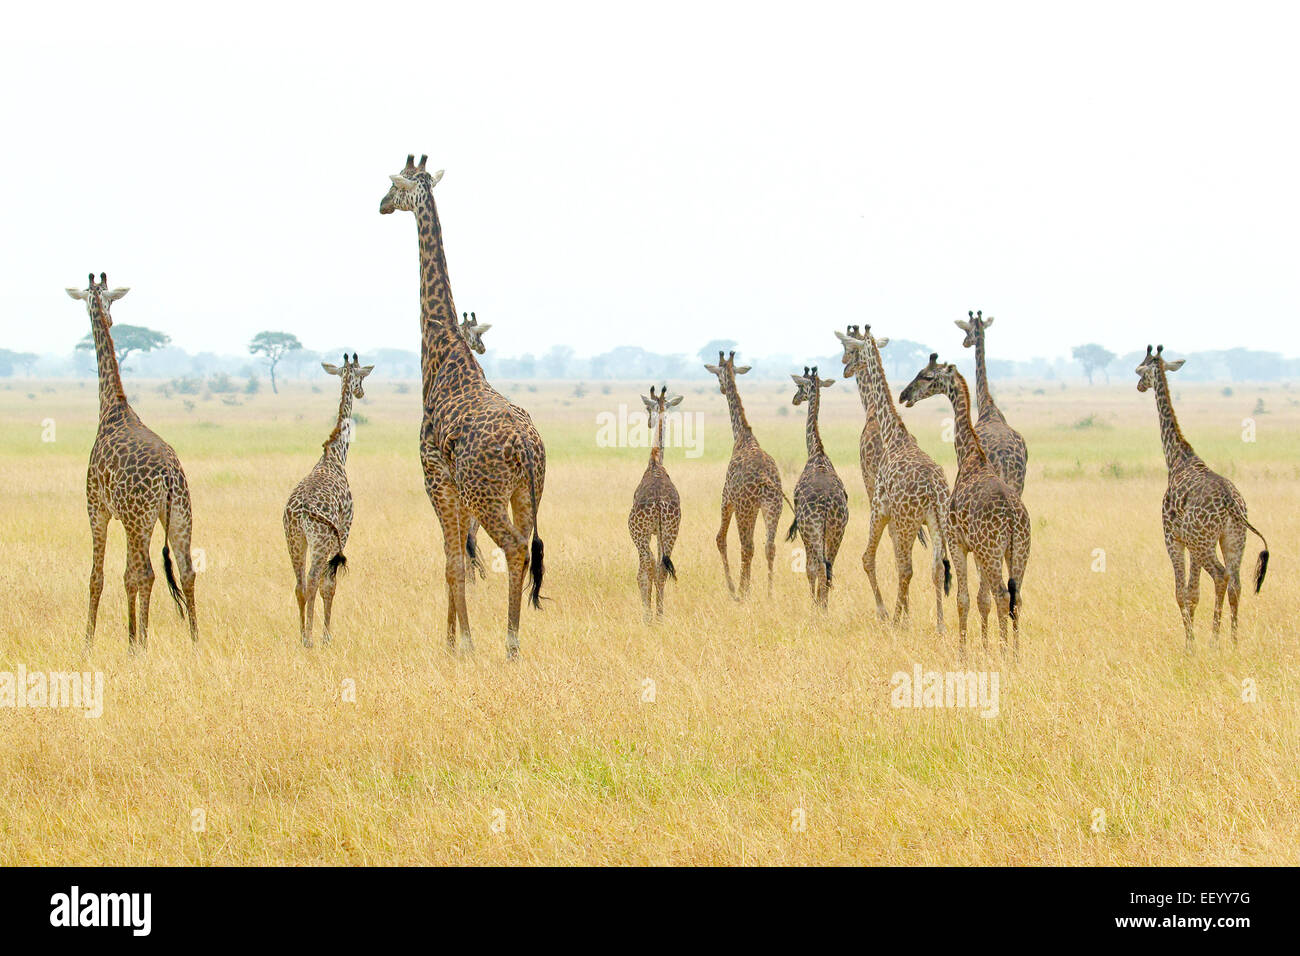 Un grupo de jirafas (Giraffa camelopardalis) en el Parque nacional Serengeti, Tanzania Foto de stock